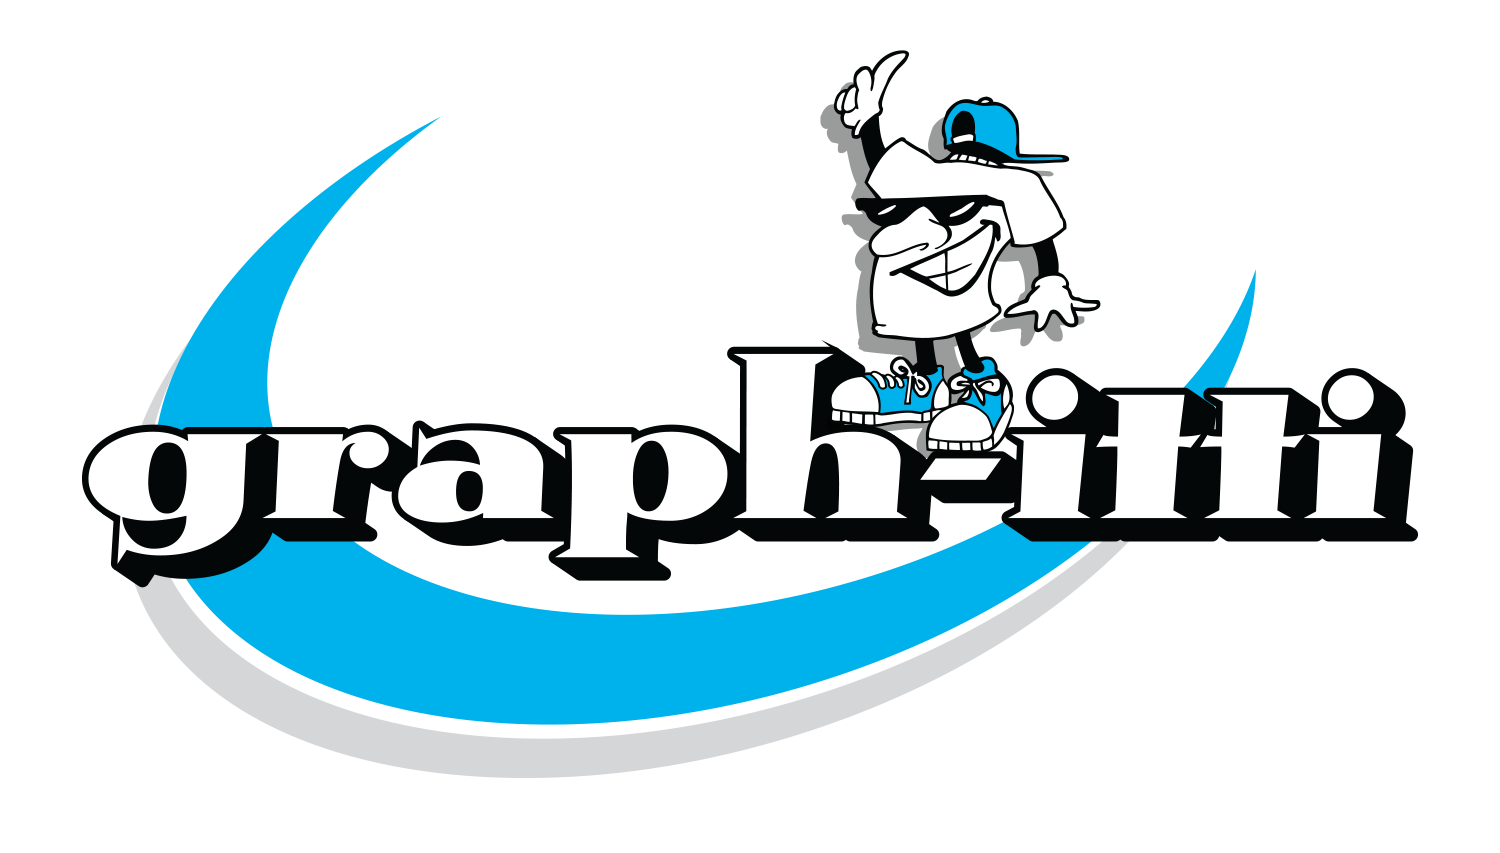 Graph-itti logo